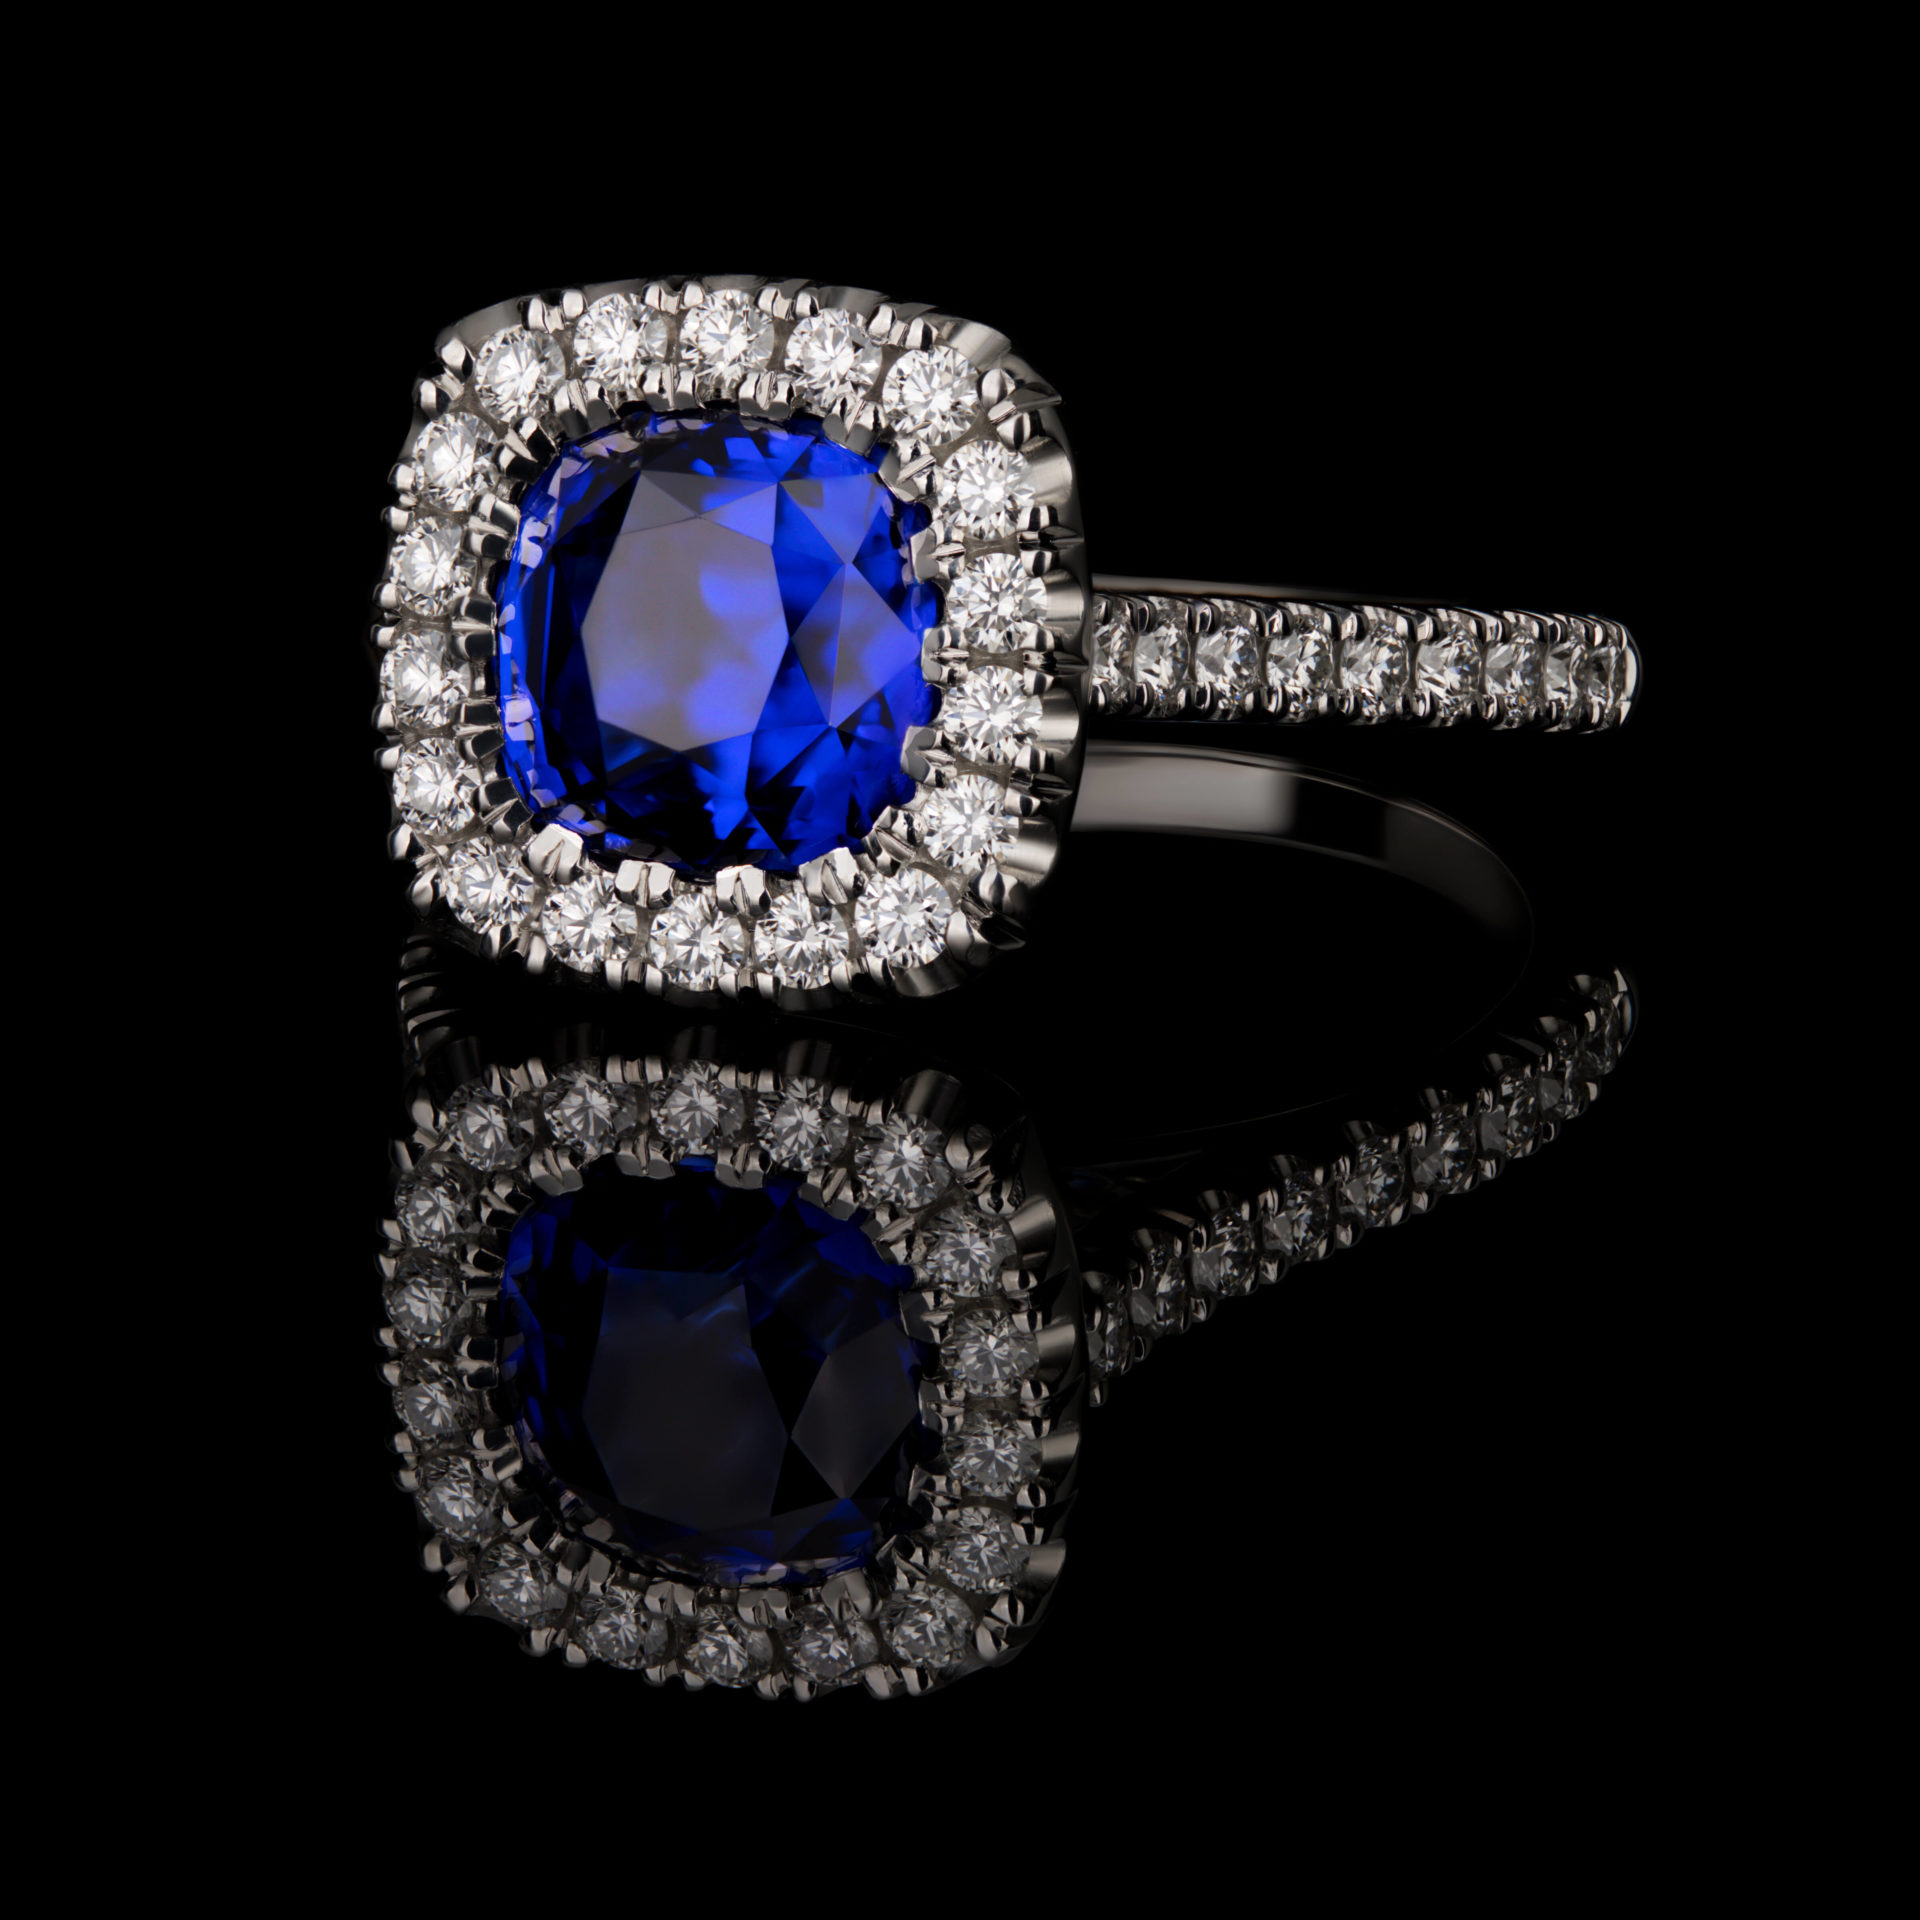 AD003 - 2.05 CT Cushion Ceylon Blue Sapphire Ring in a Clawless Halo - 2